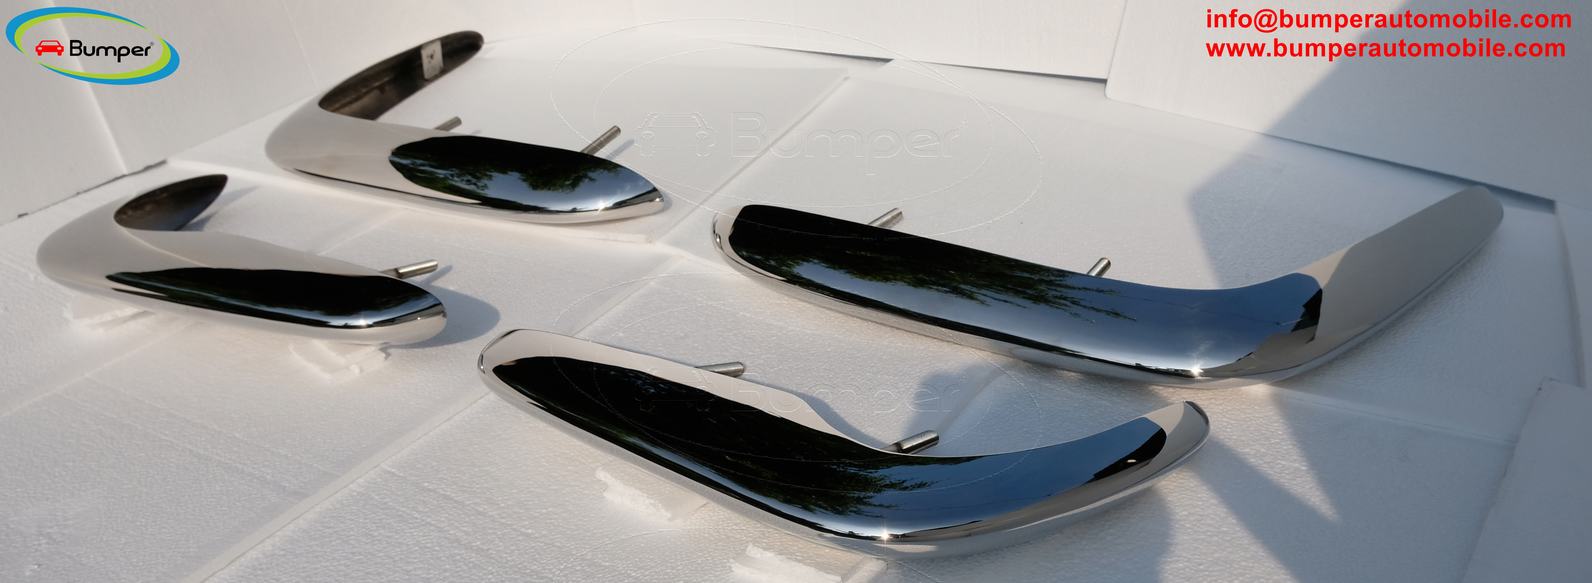 Aston Martin DB6 bumpers